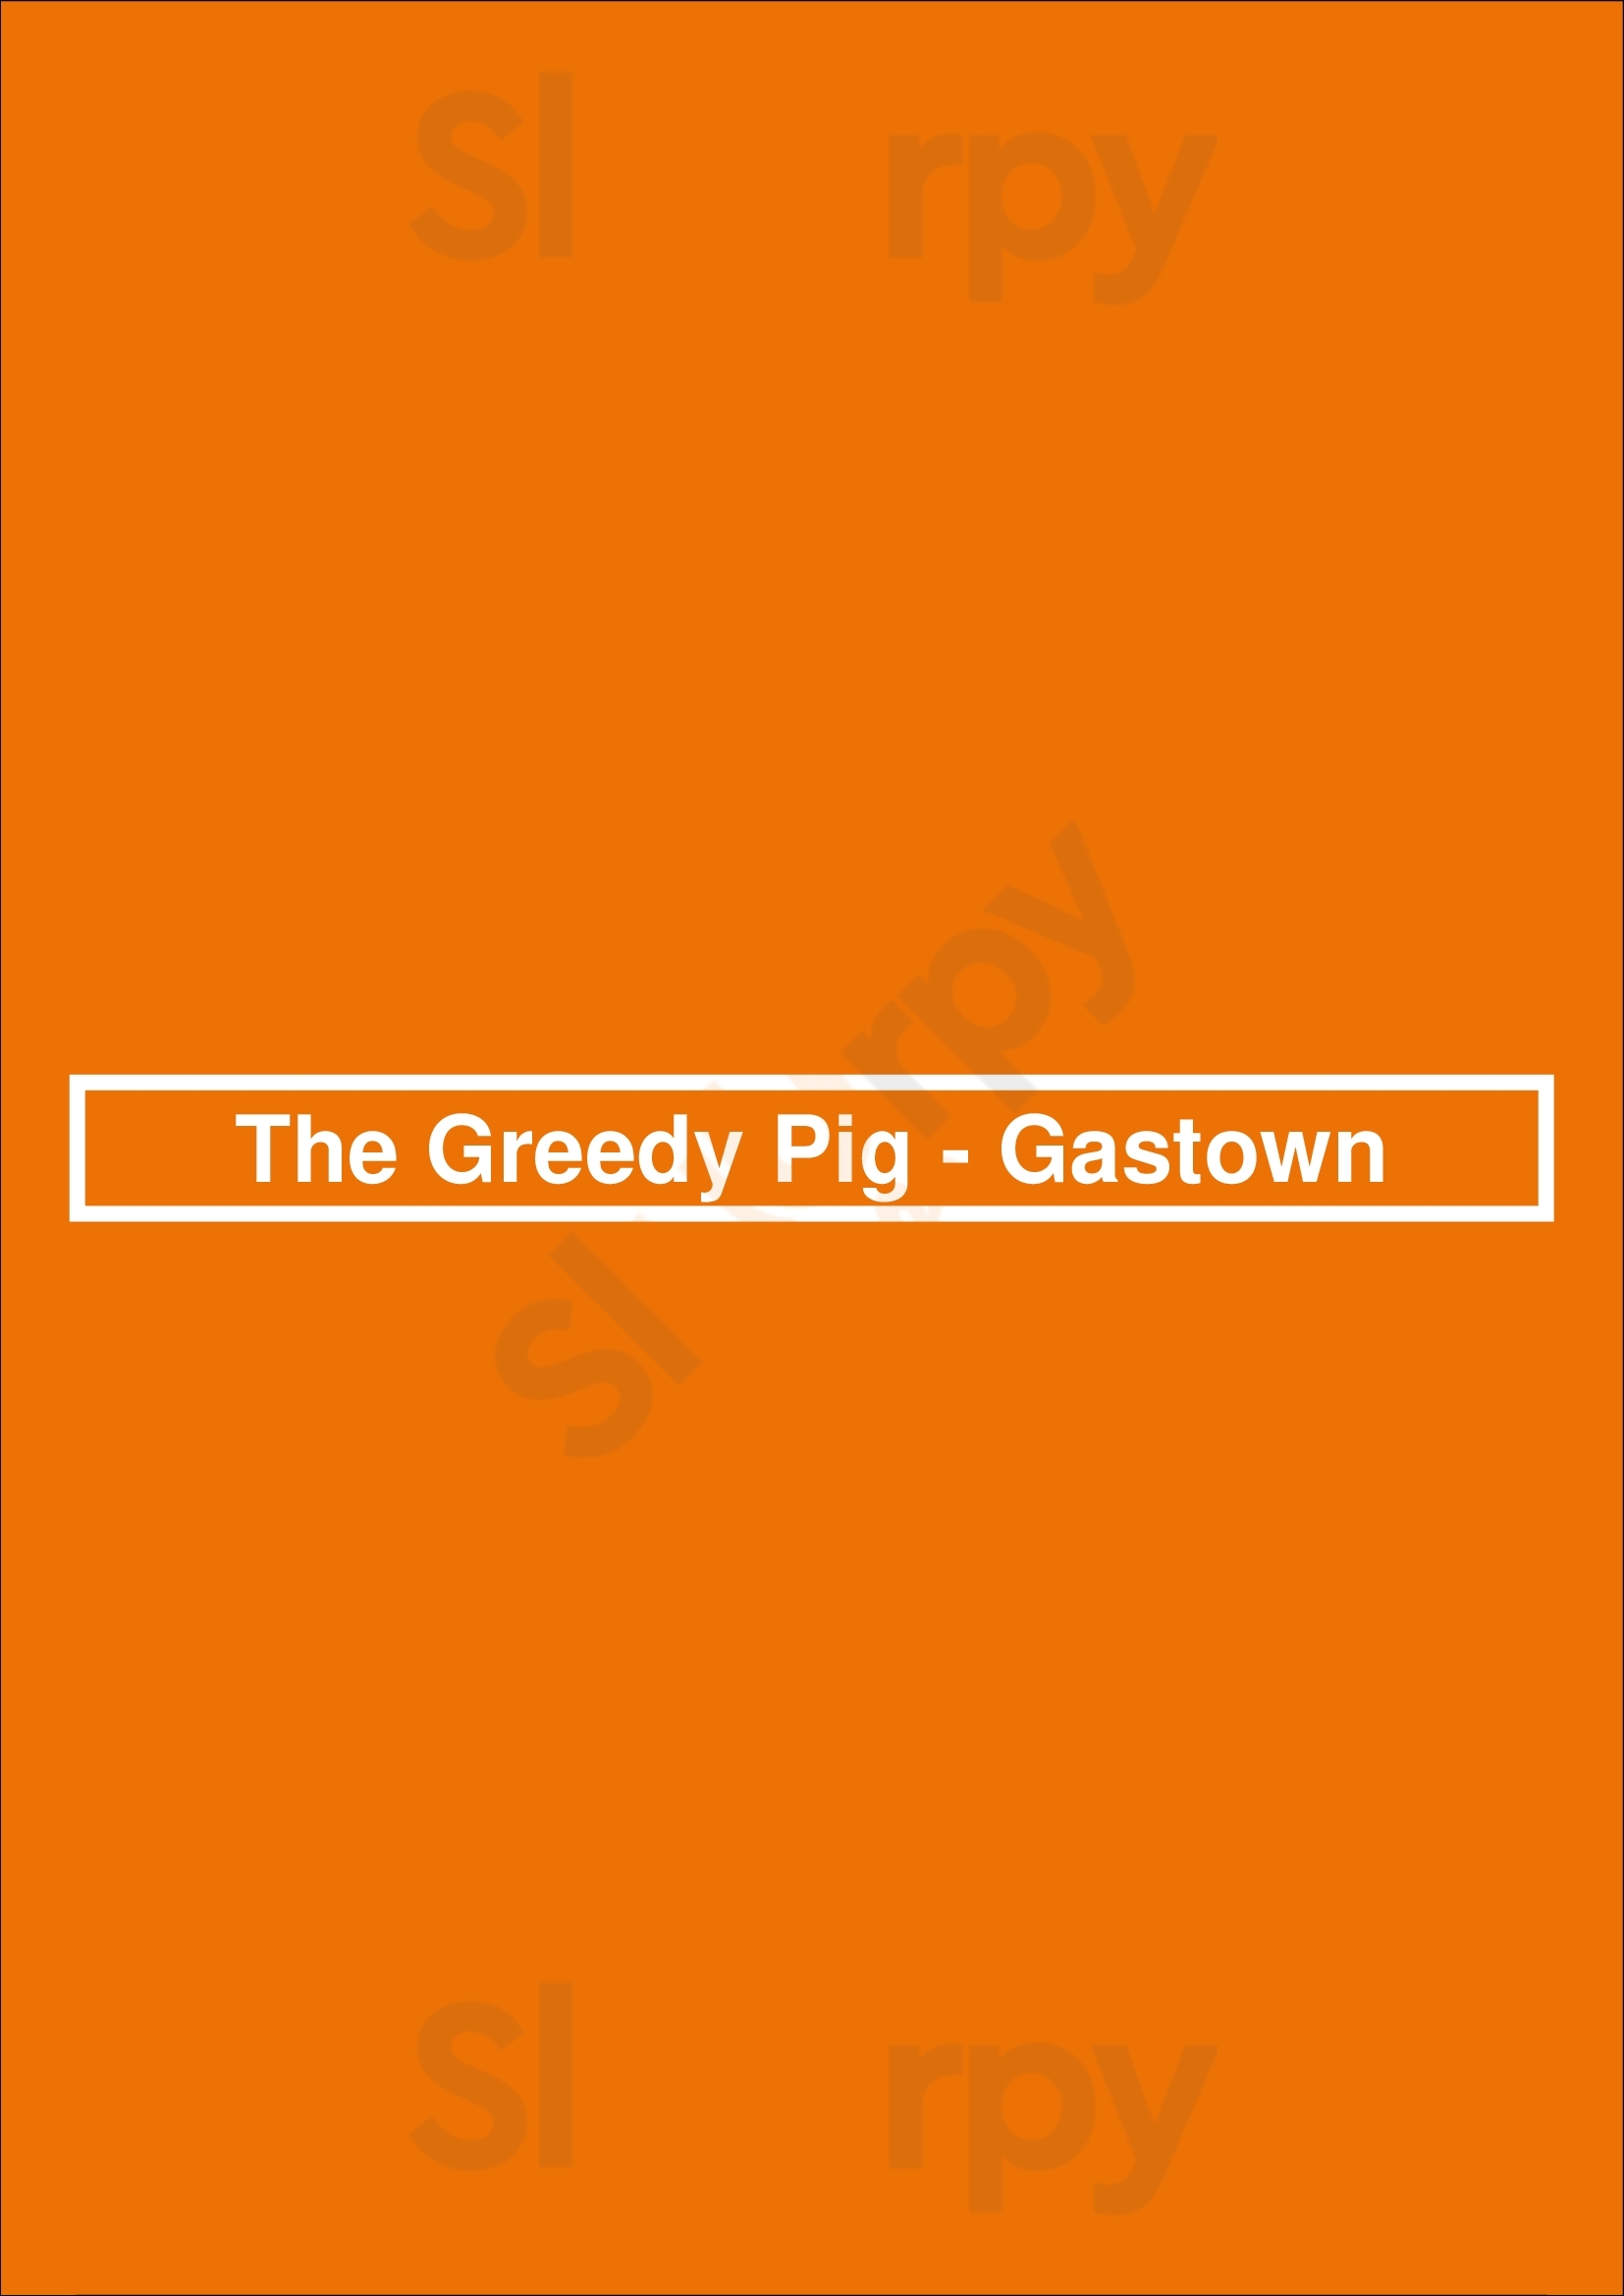 The Greedy Pig - Gastown Vancouver Menu - 1